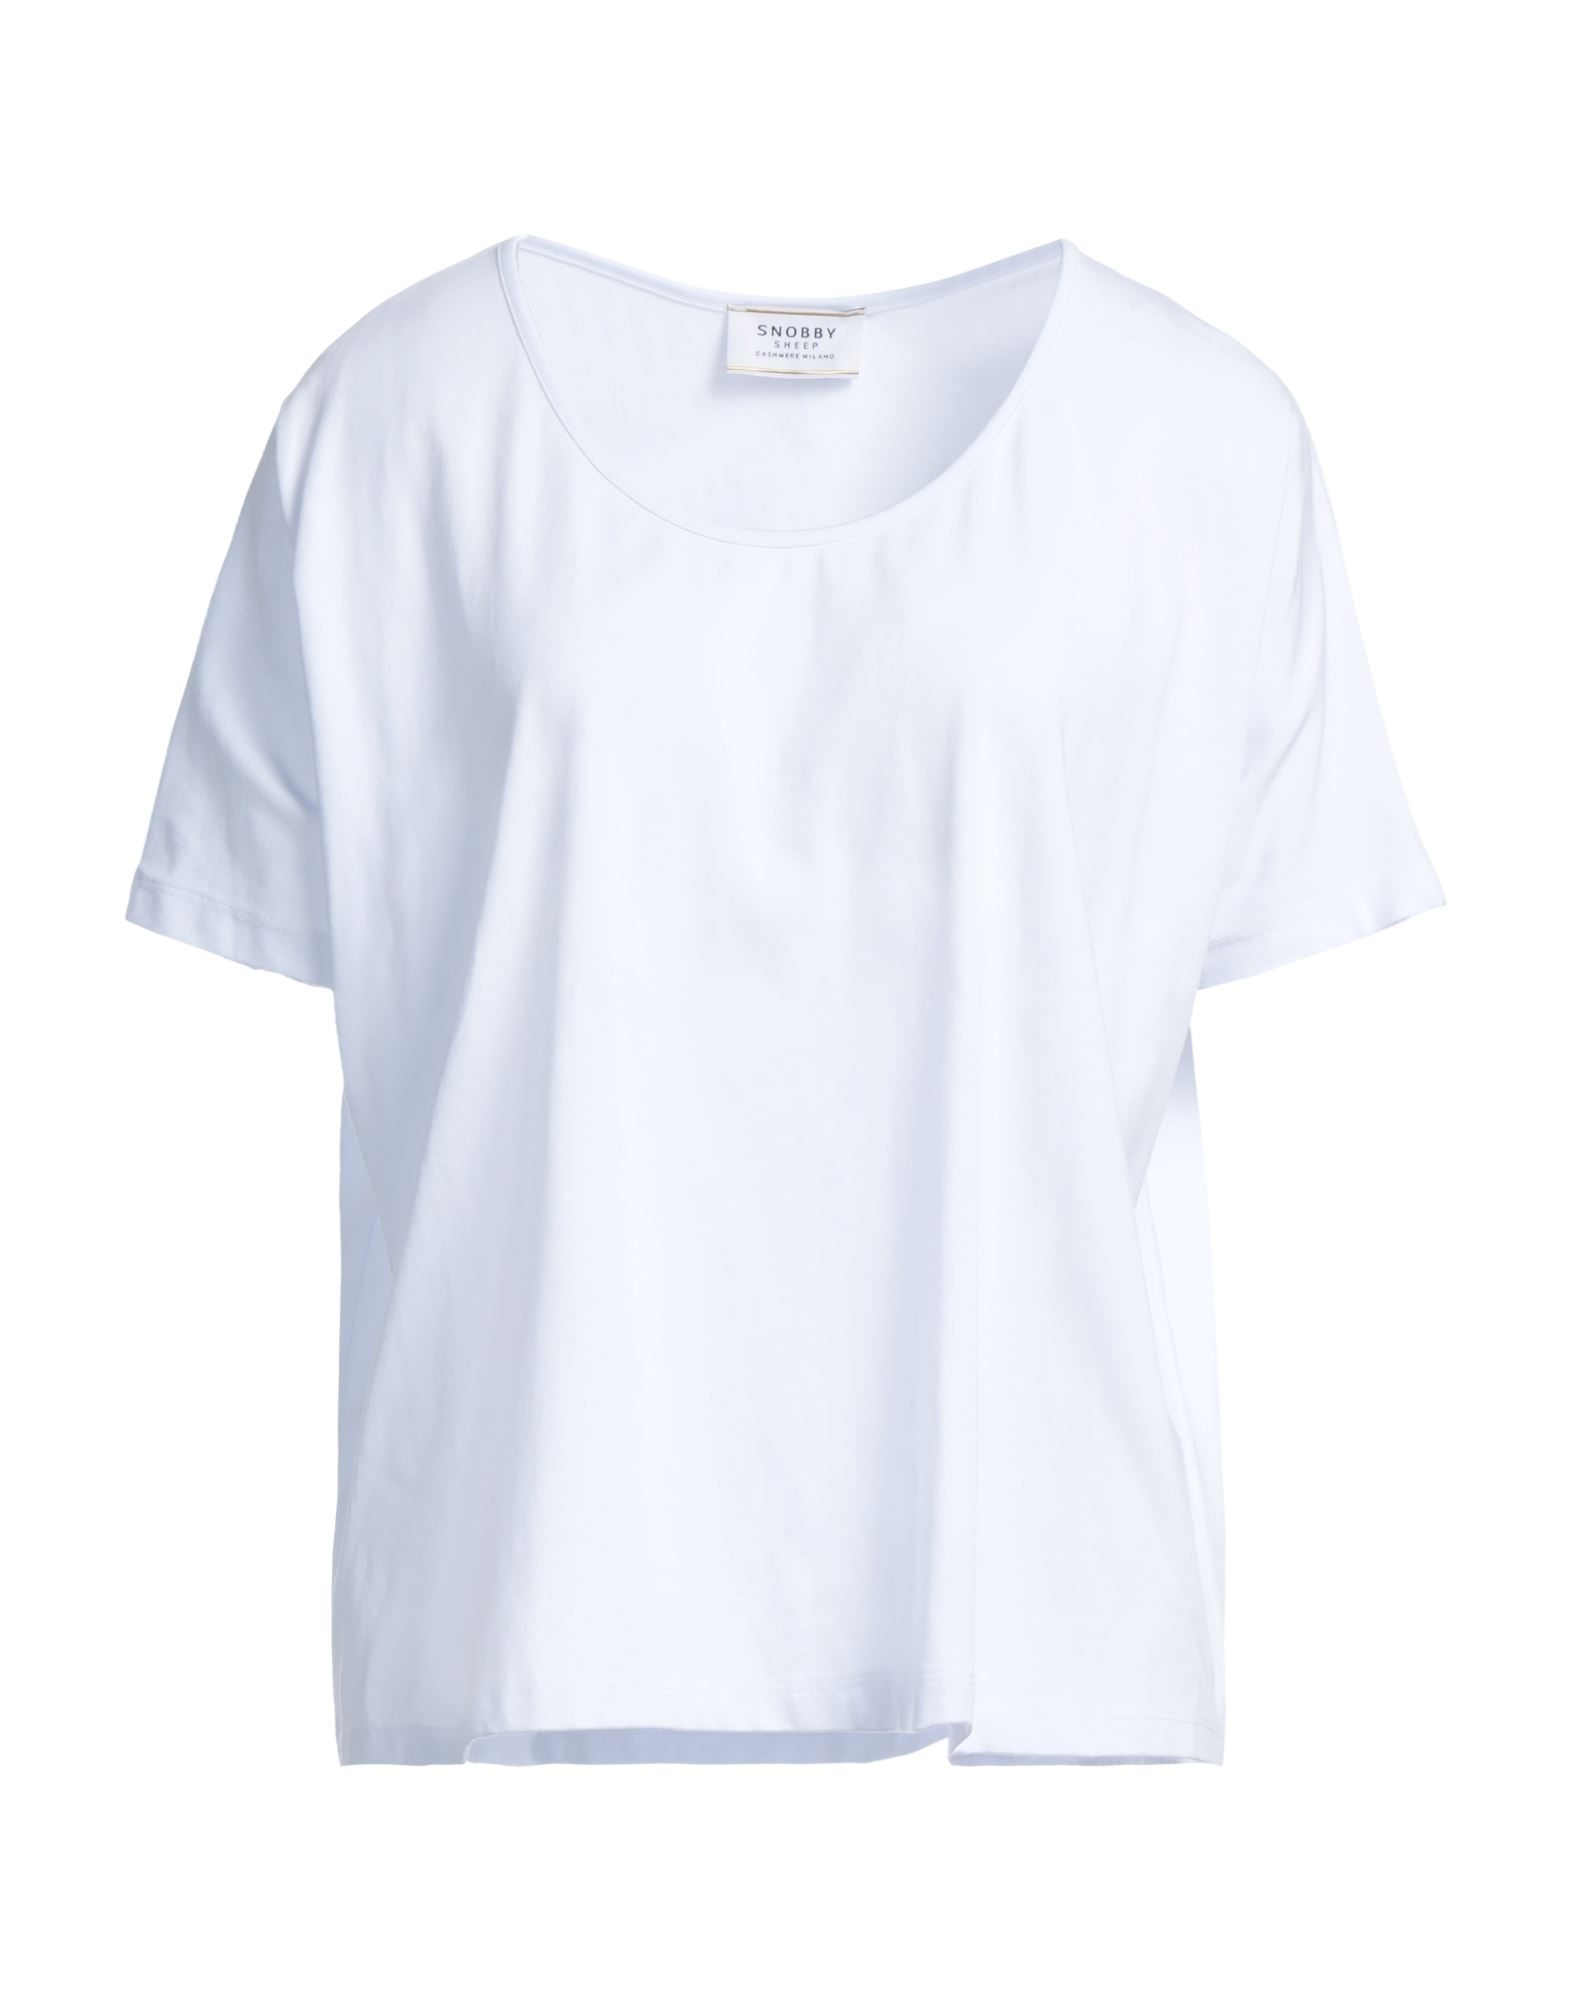 Snobby Sheep T-shirts In White